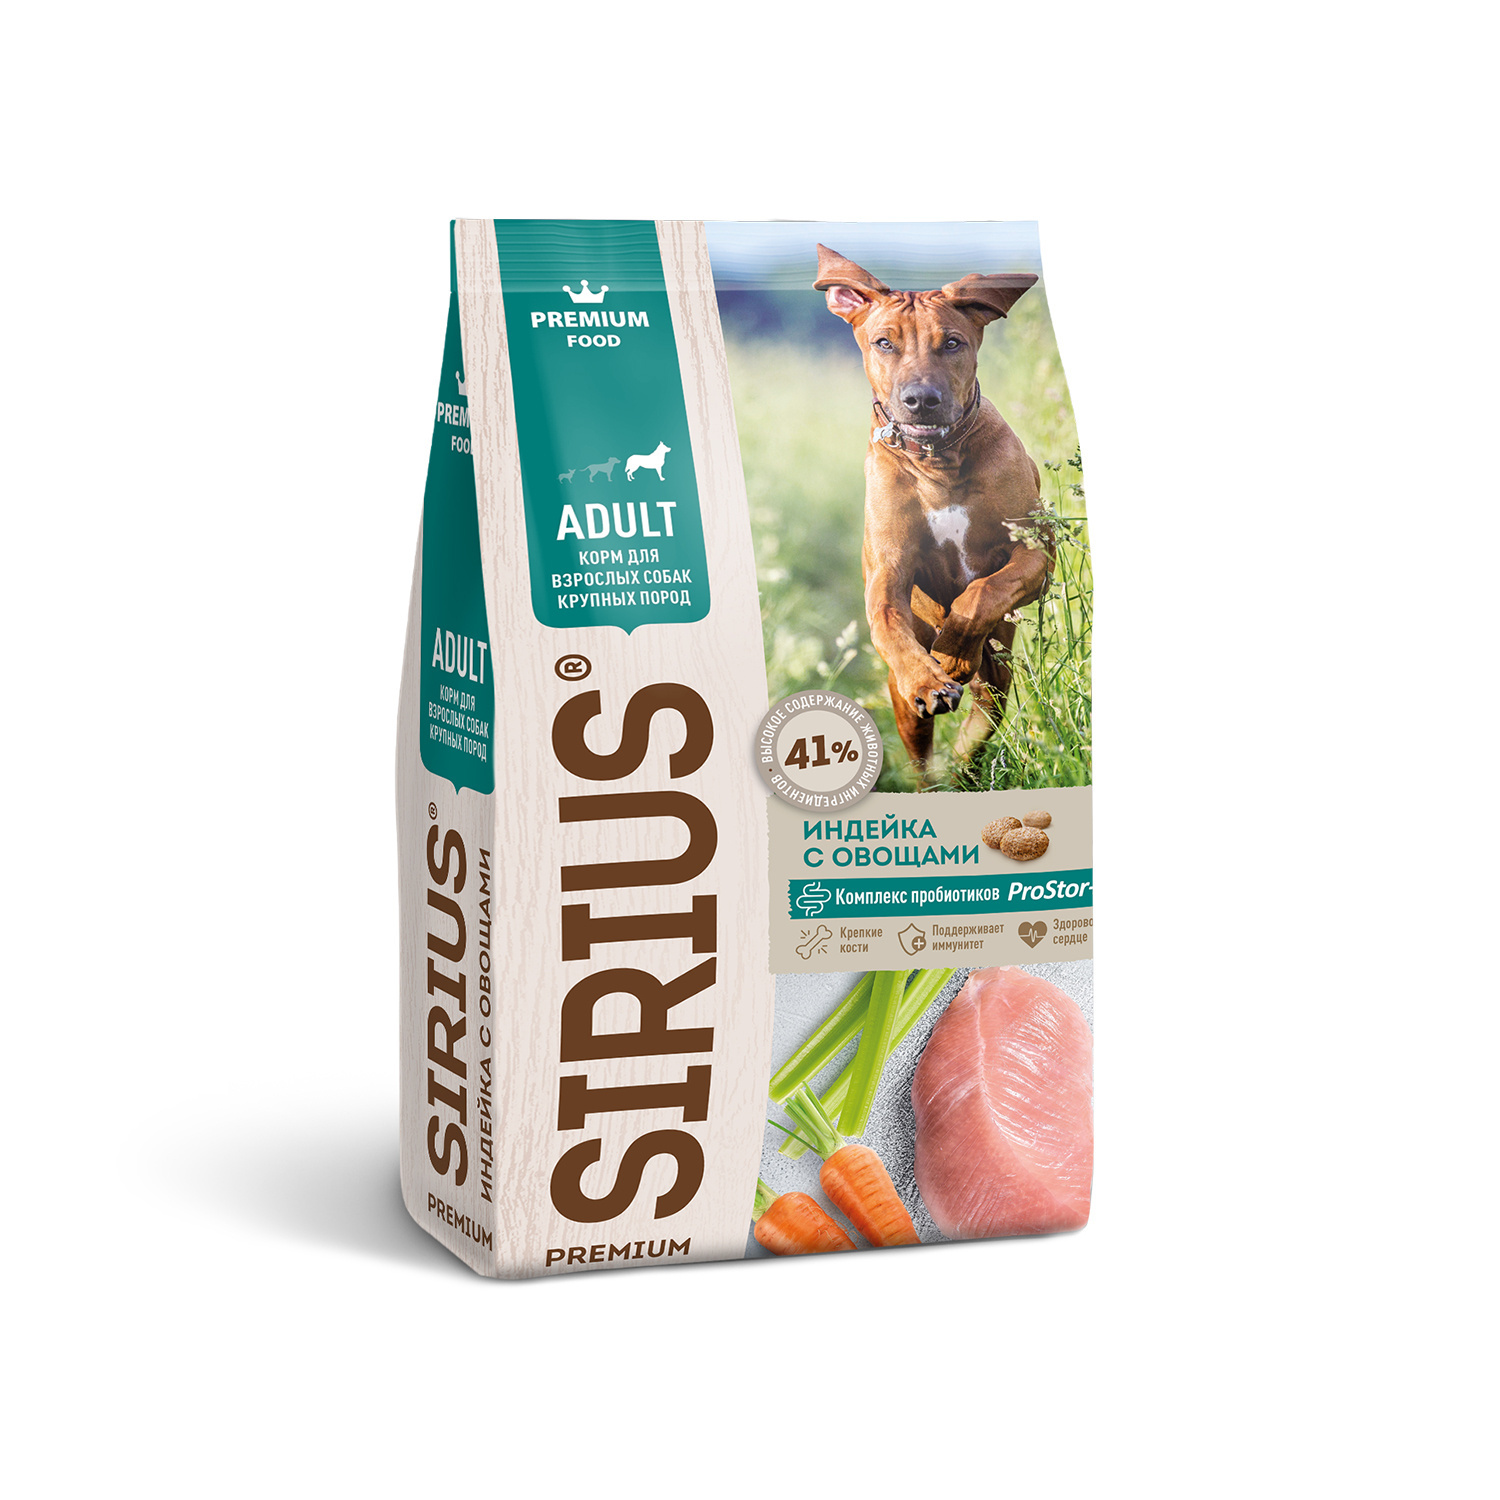 Sirius Sirius сухой корм для собак крупных пород, индейка с овощами (15 кг) sirius sirius сухой корм для собак говядина с овощами 15 кг